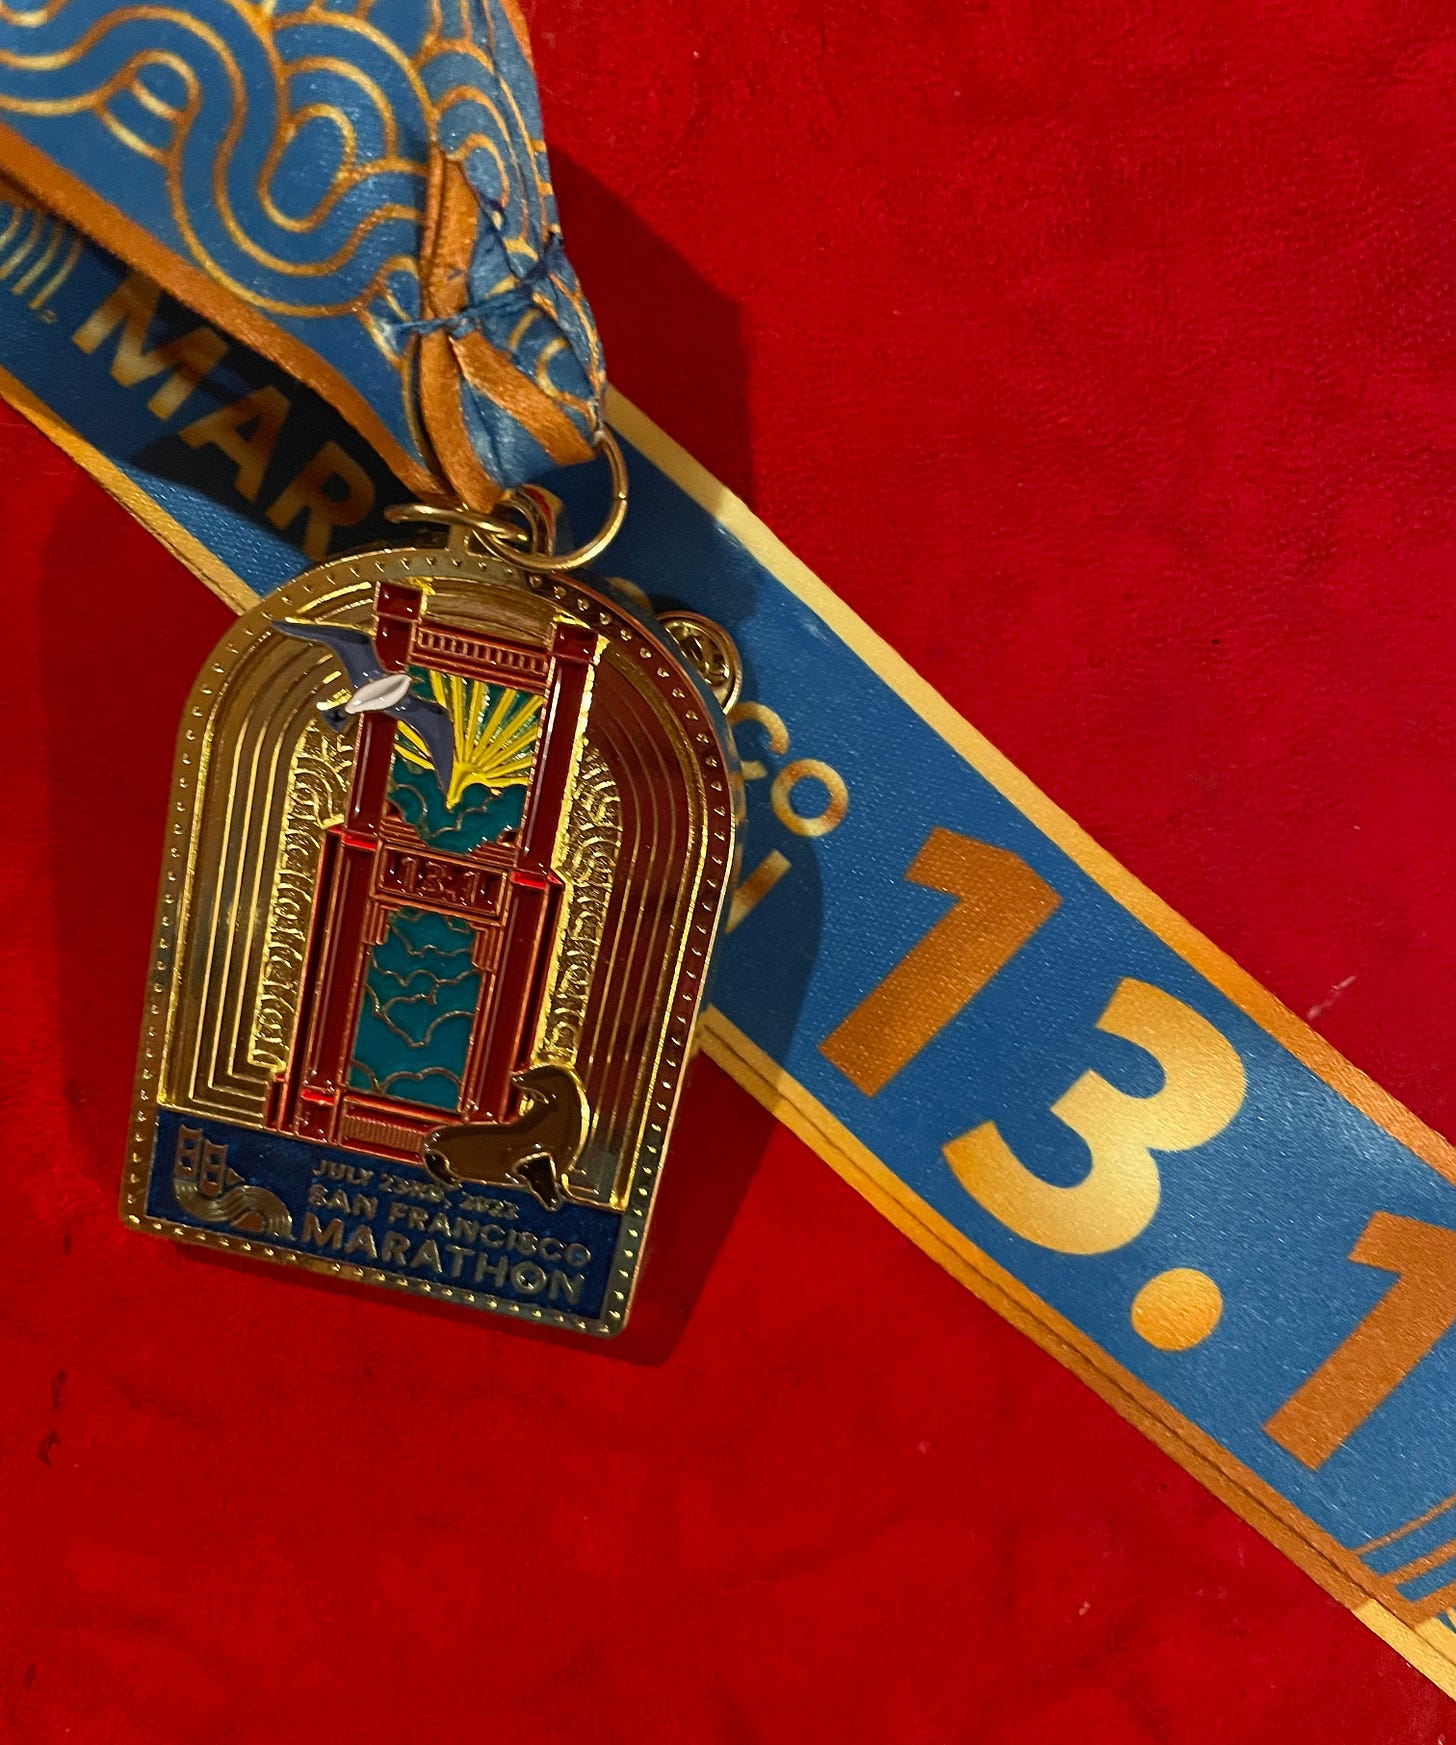 San Francisco 2023 Half Marathon medal